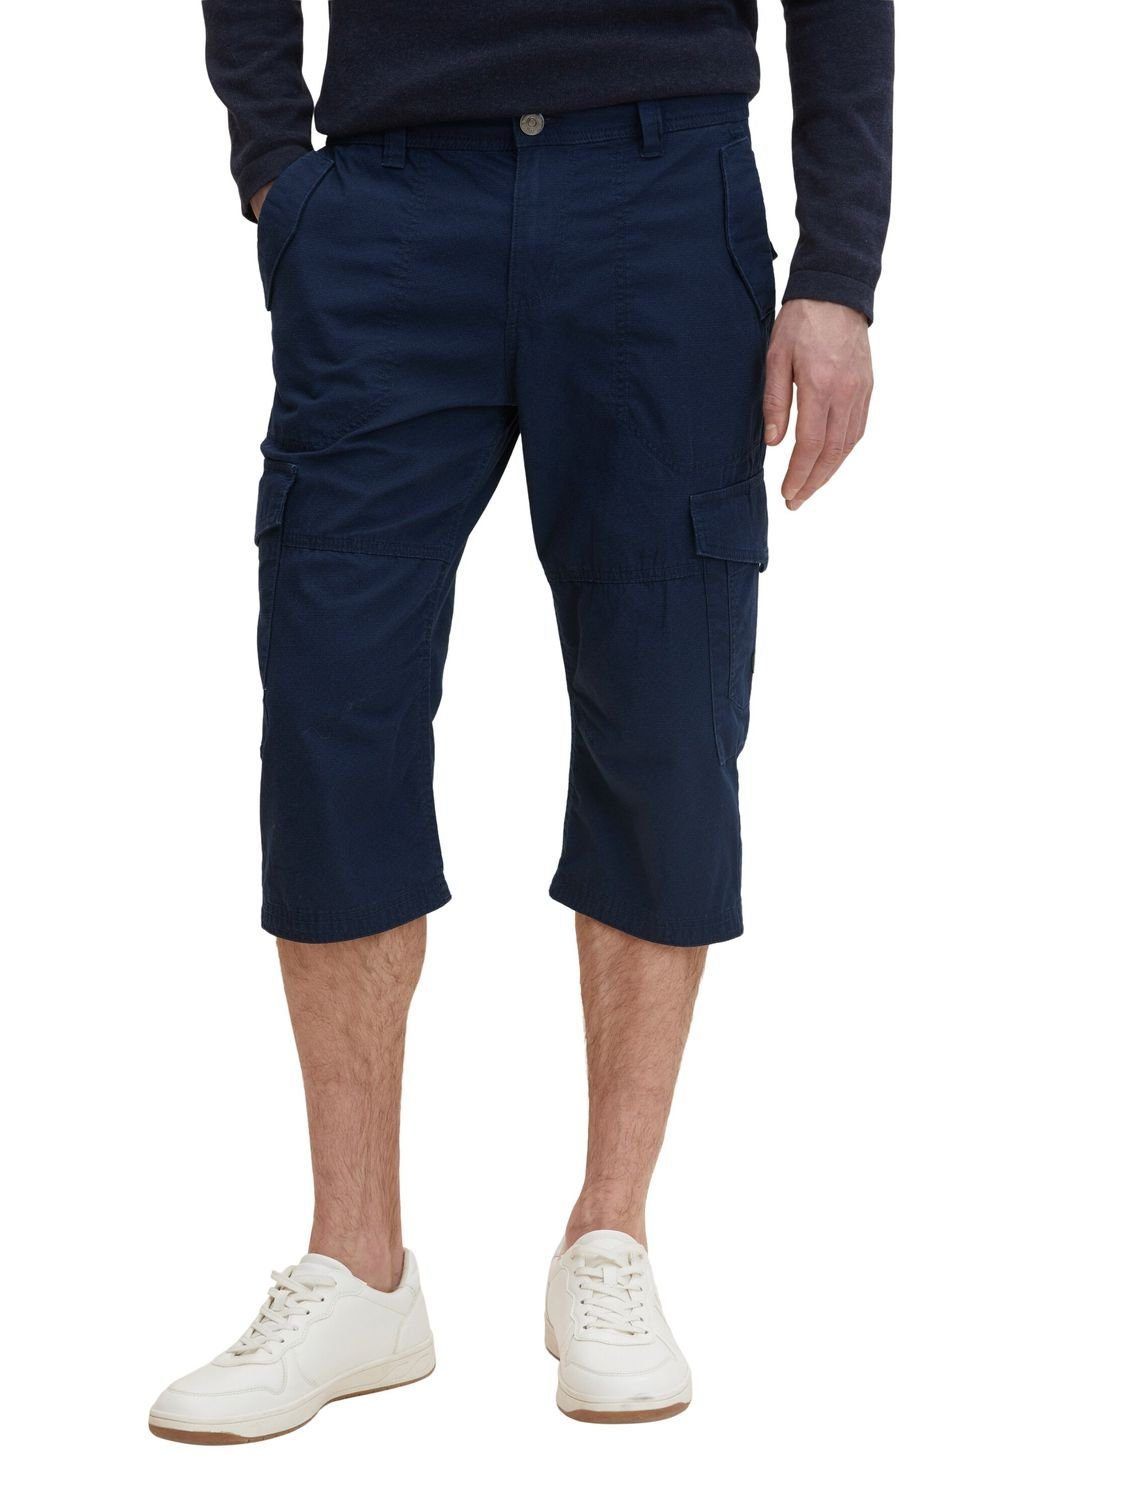 Minimal MAX TAILOR TOM Shorts Navy OVERKNEE Design 29122 Baumwolle aus